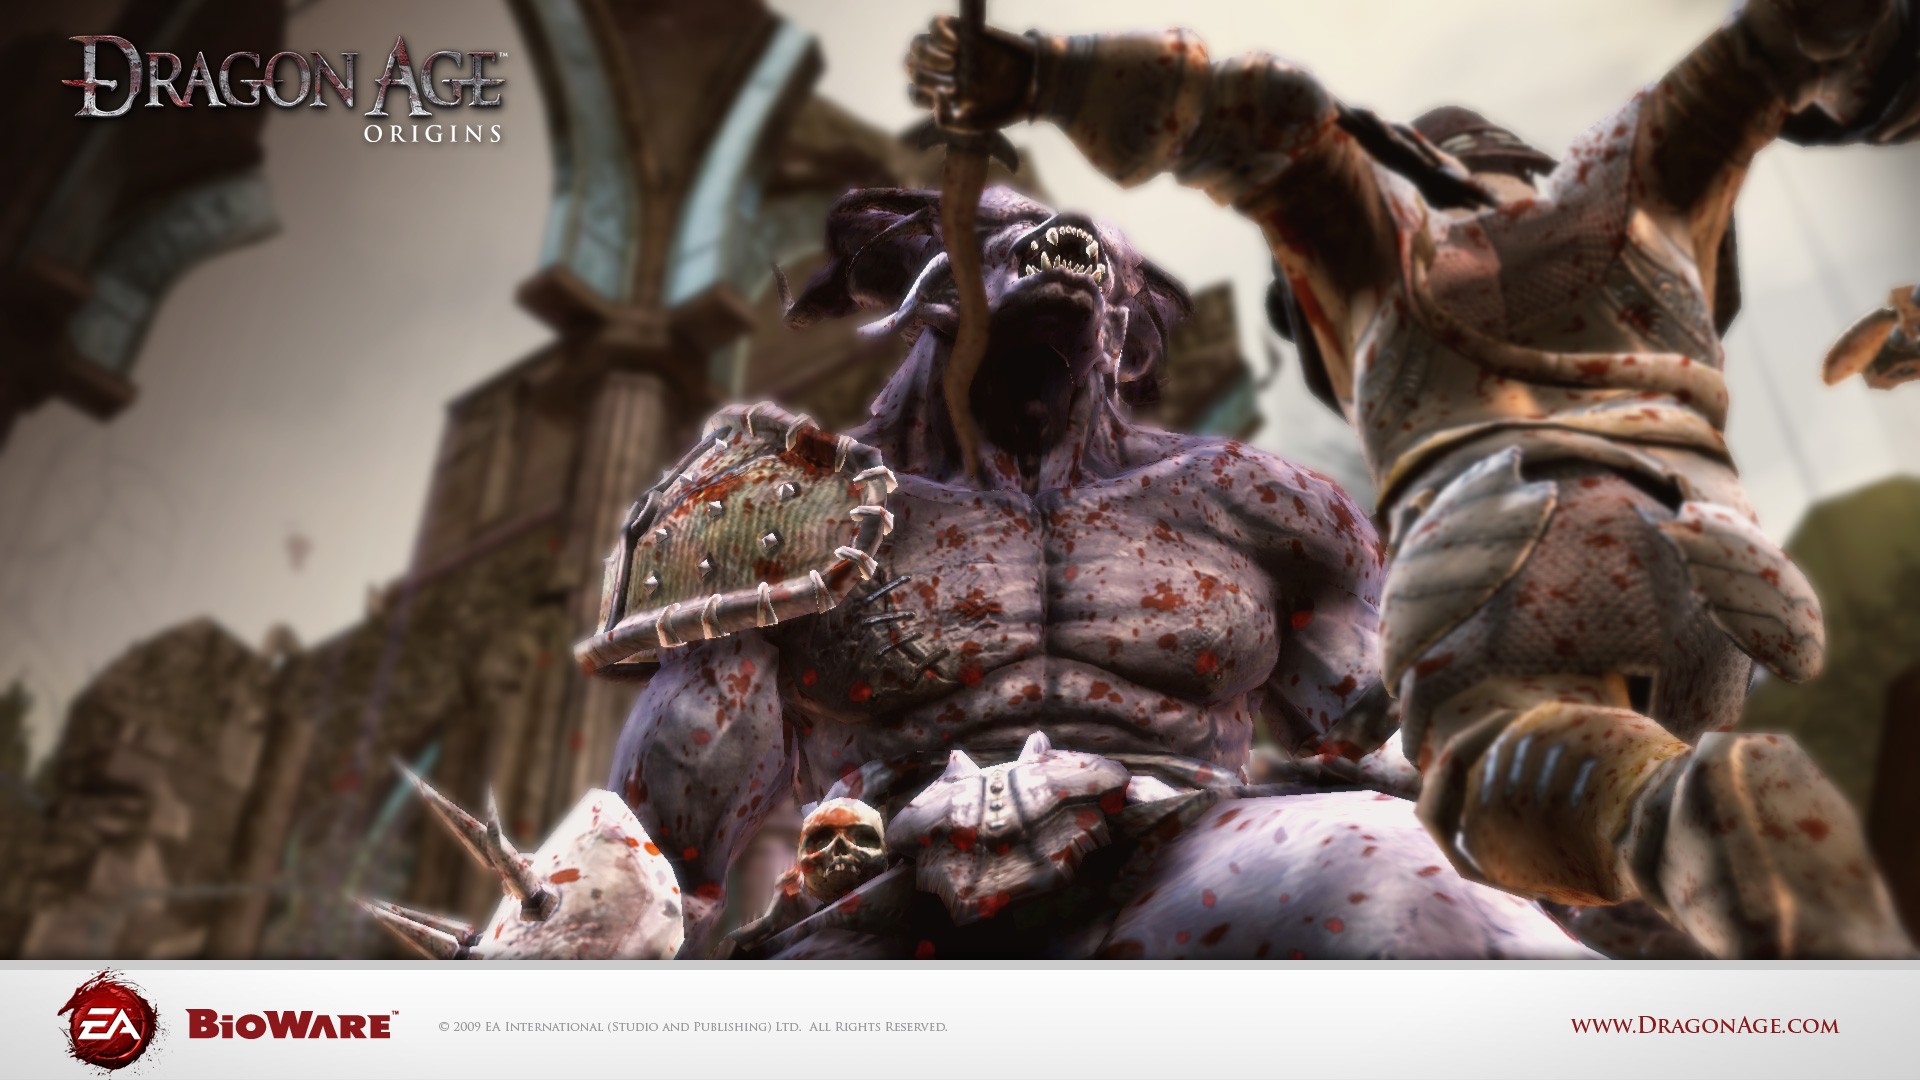 General 1920x1080 video games RPG Dragon Age: Origins PC gaming Bioware 2009 (Year) Electronic Arts